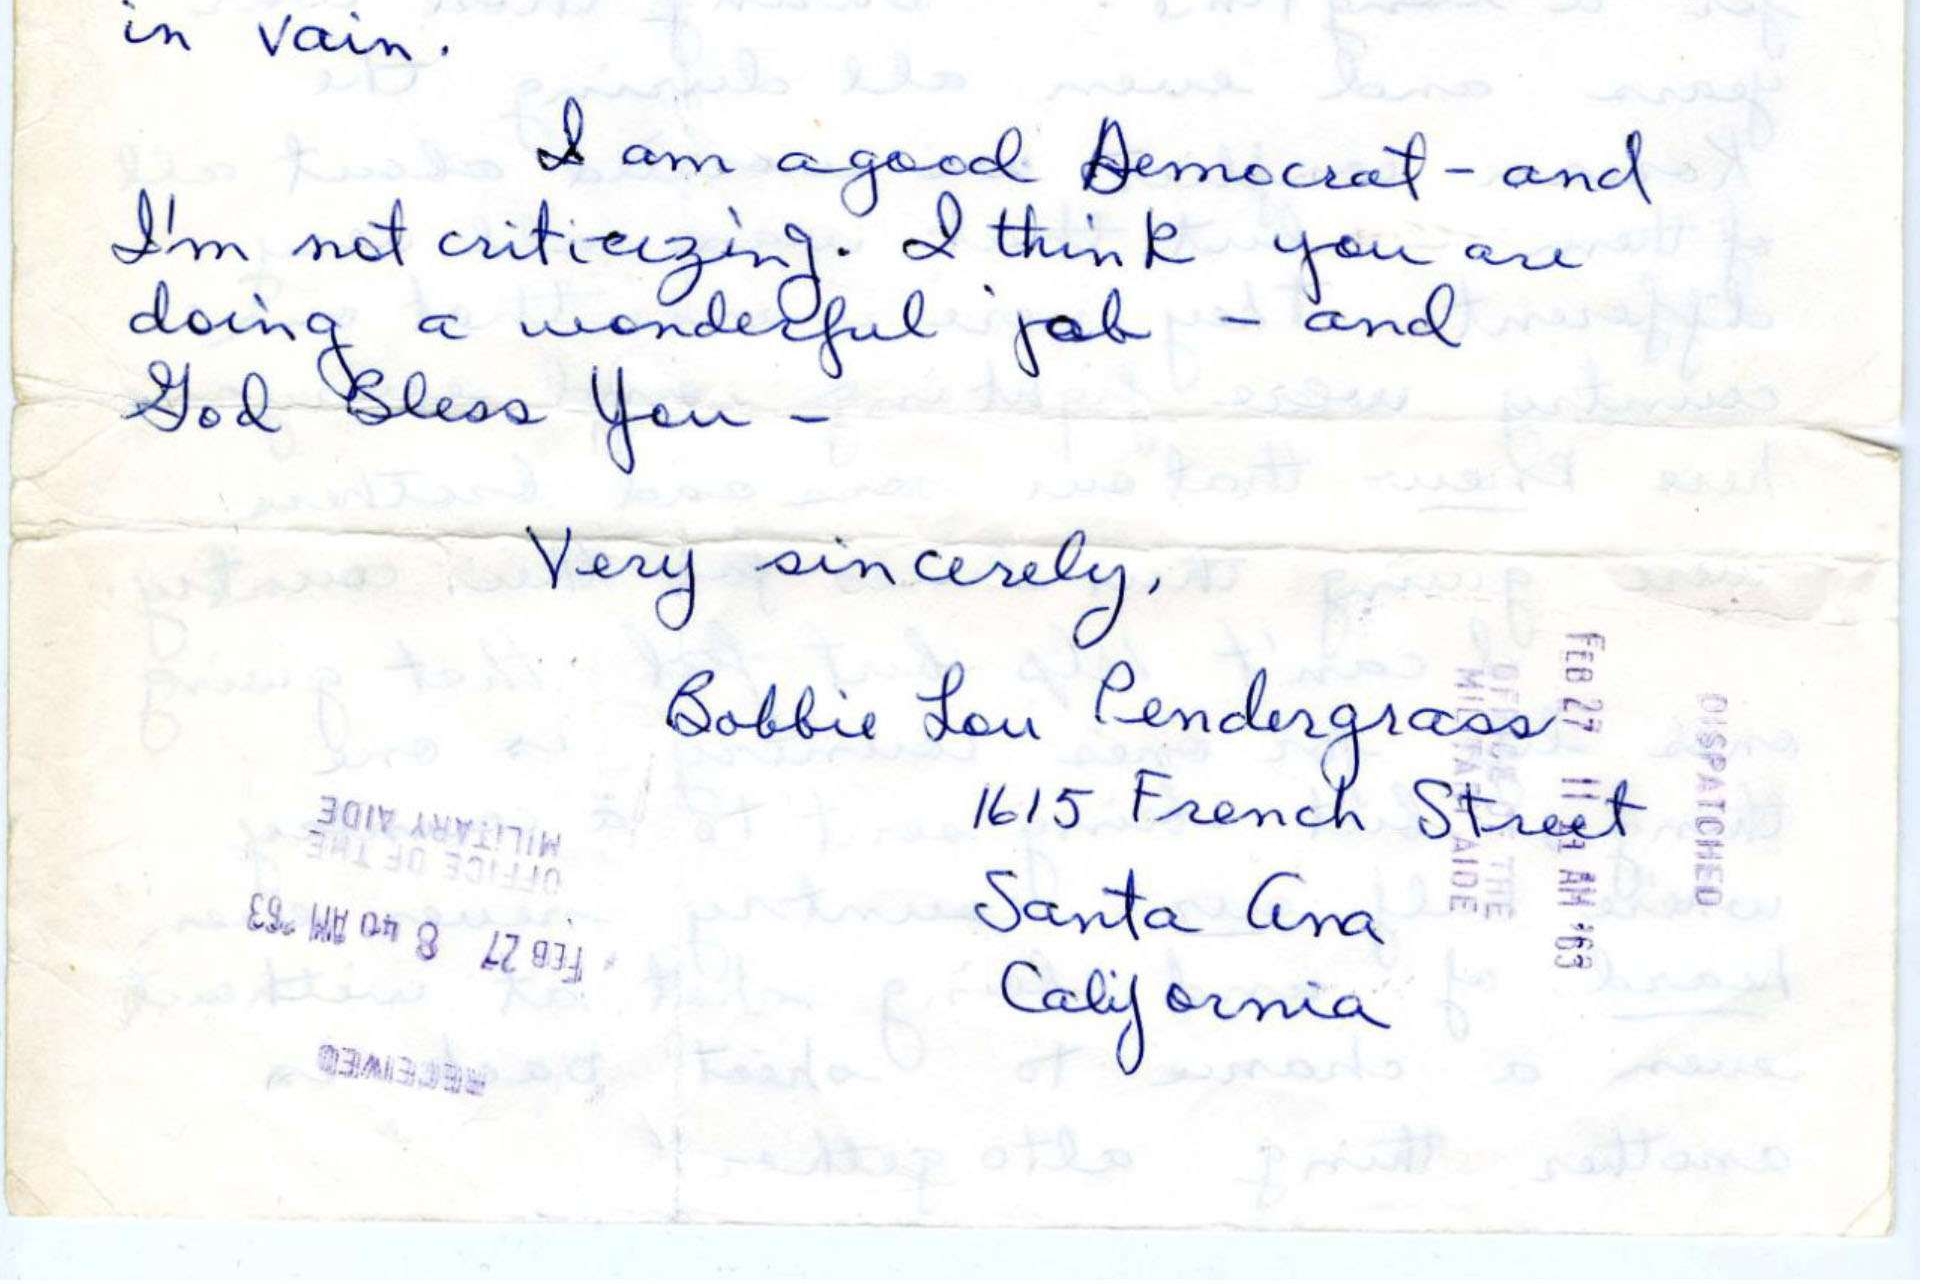 Letter from Bobbie Lou Pendergrass to President Kennedy